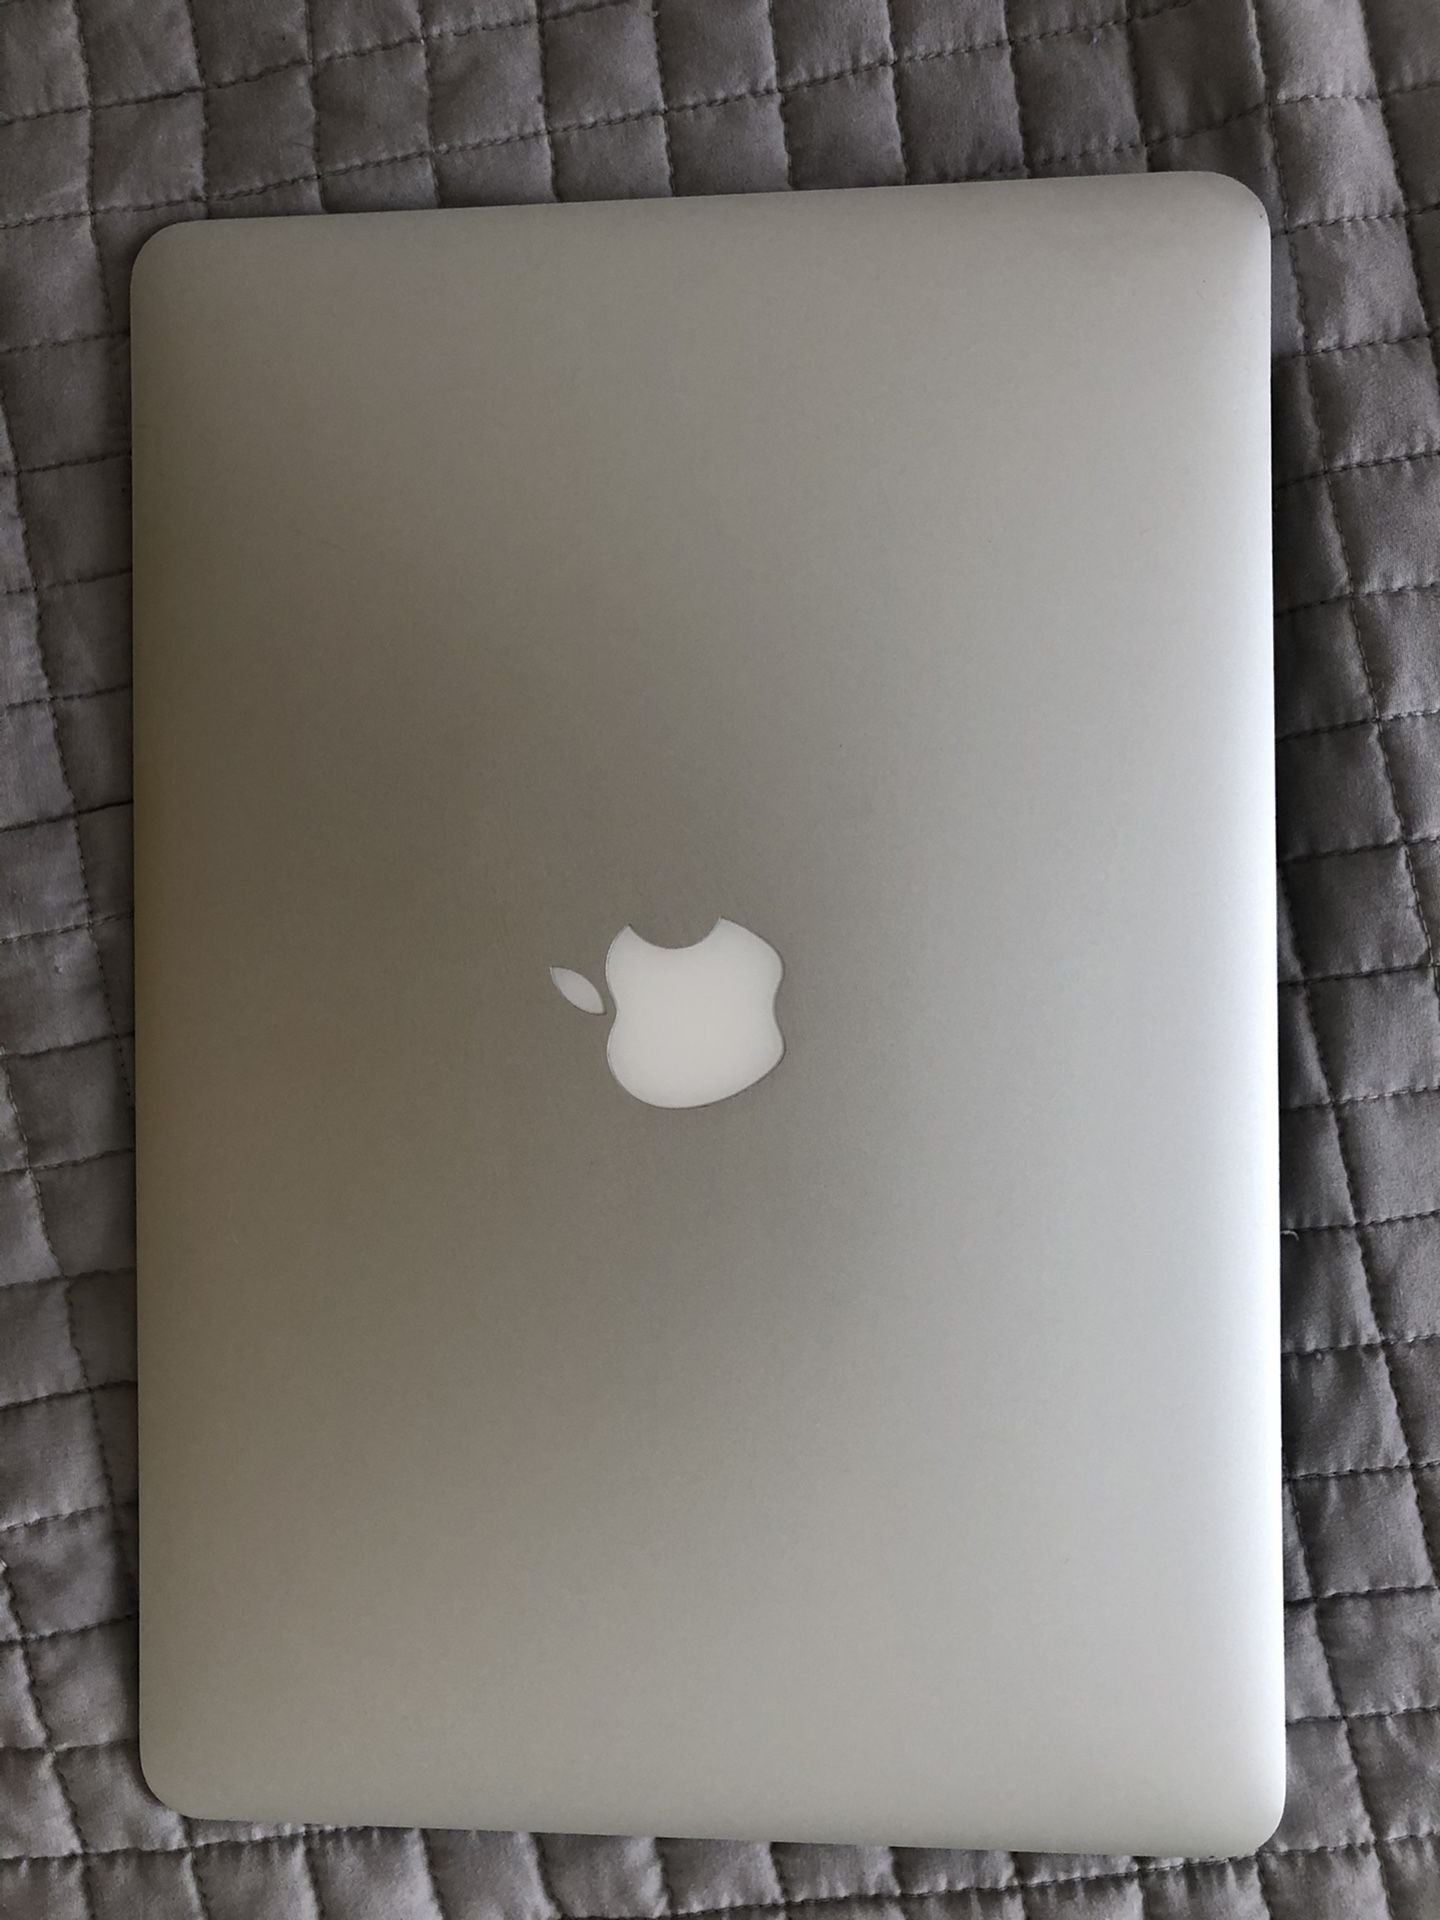 Macbook Air 13 inch ( 2015)